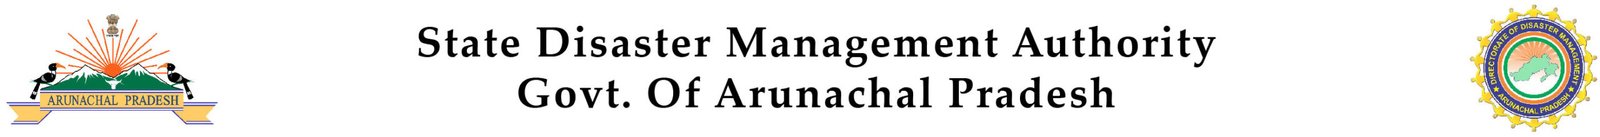 State Disaster Management Authority Govt. Of Arunachal Pradesh